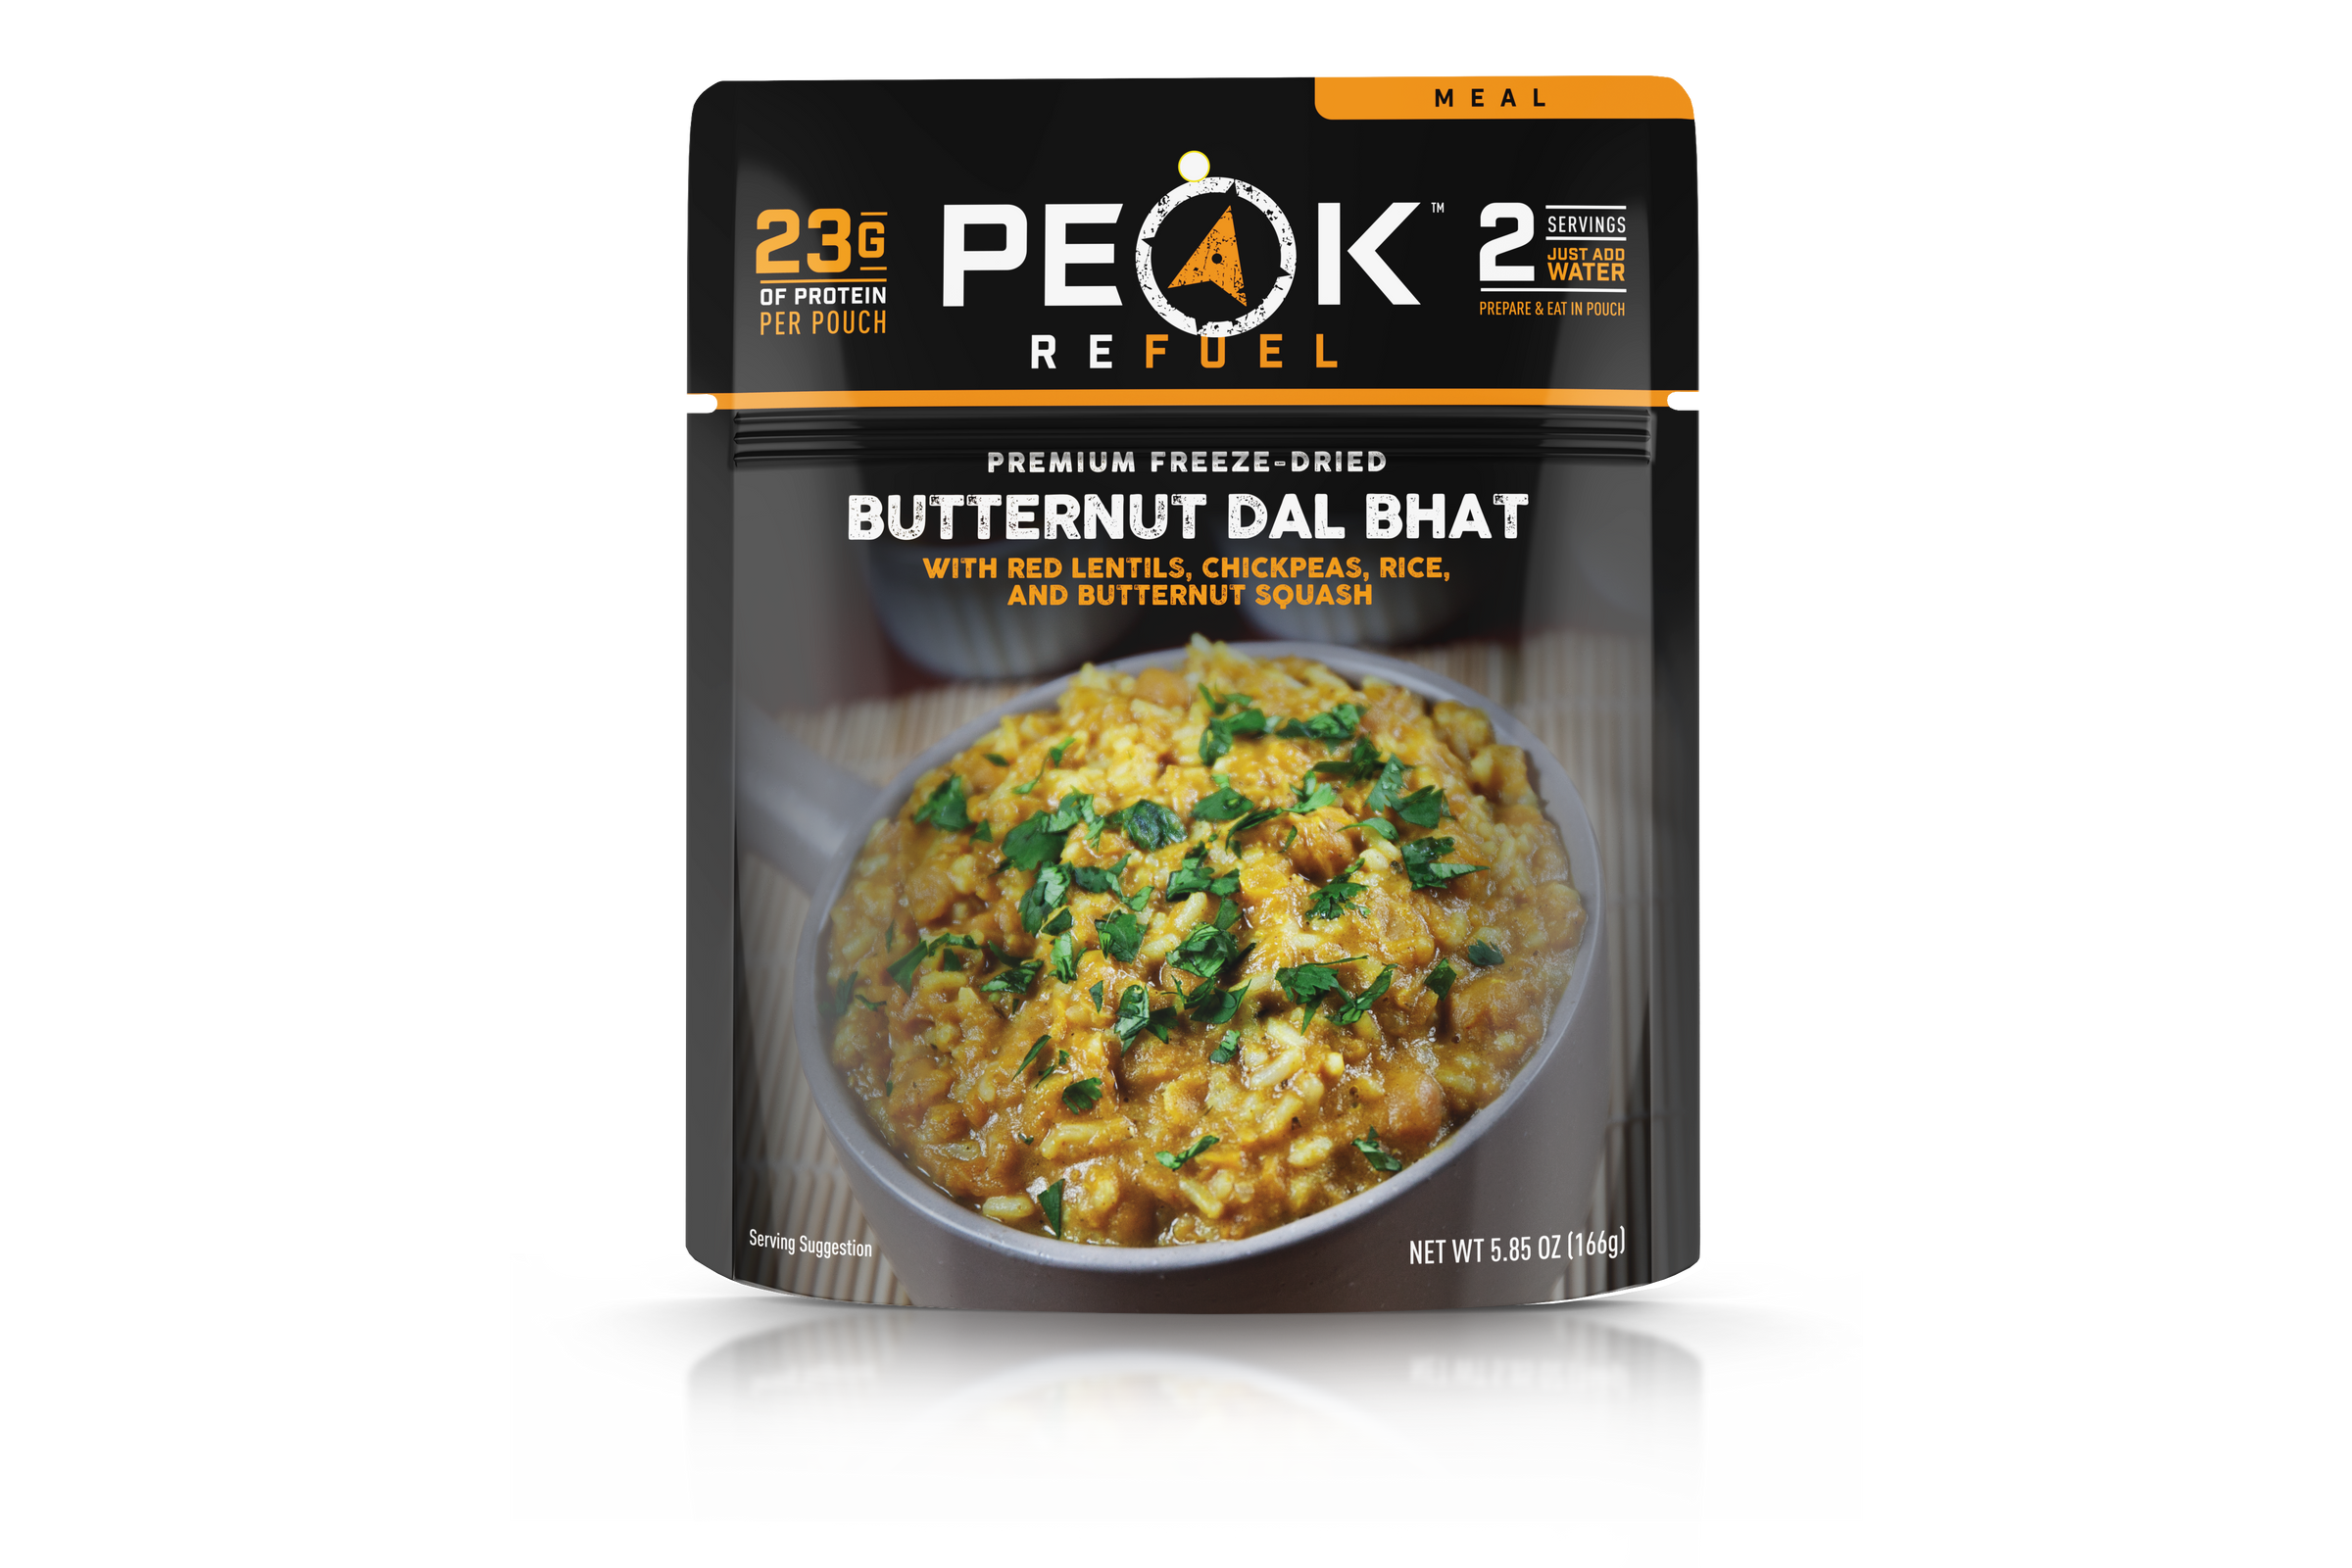 Peak Refuel Butternut Dal Bhat 2 Serving Pouch